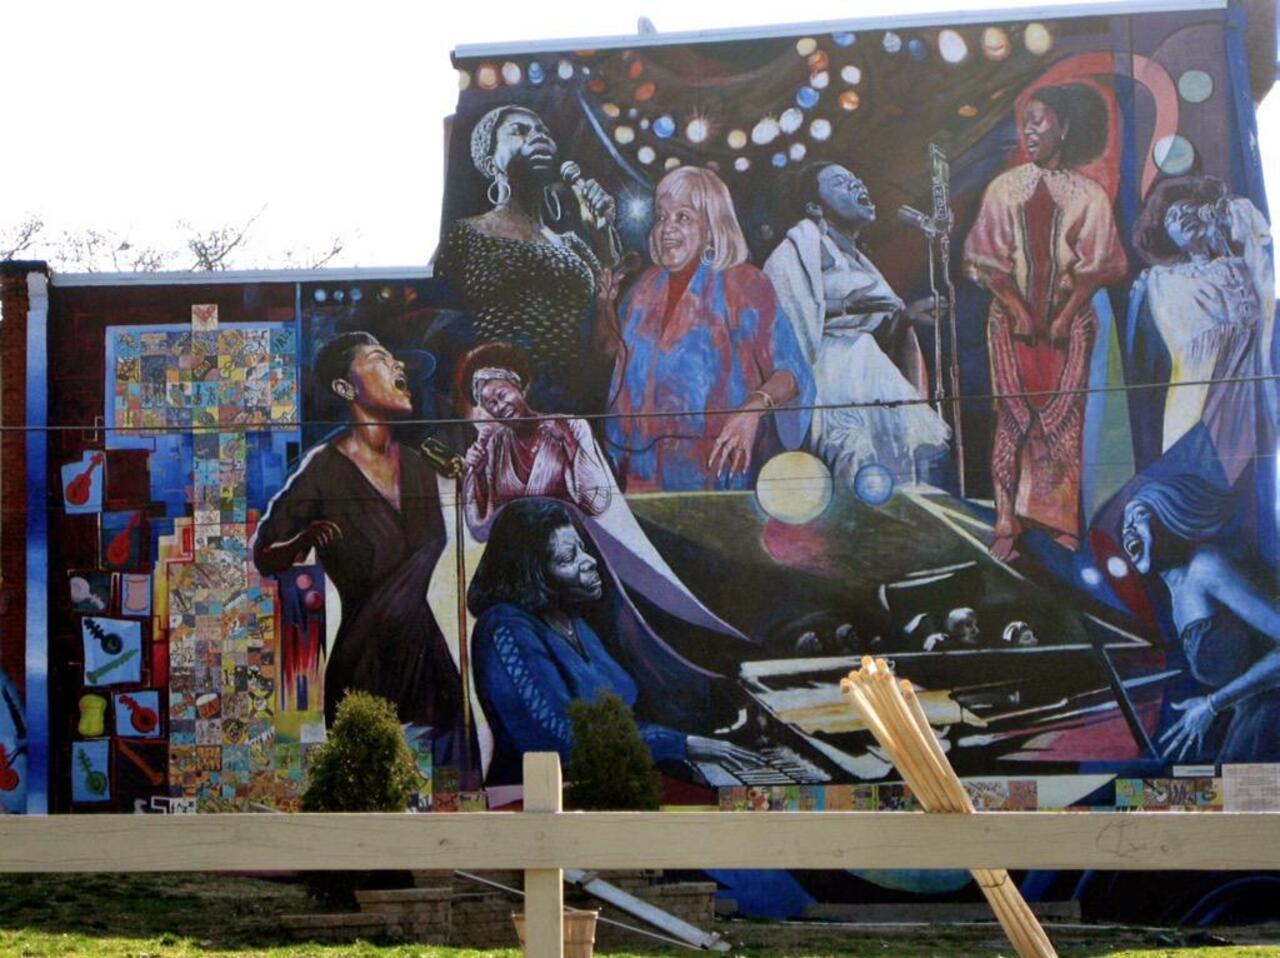 Street Art / "Women of Jazz"
Strawberry Mansion, Philadelphia 
#streetart #art #graffiti #mural http://t.co/iml1cYbQlT